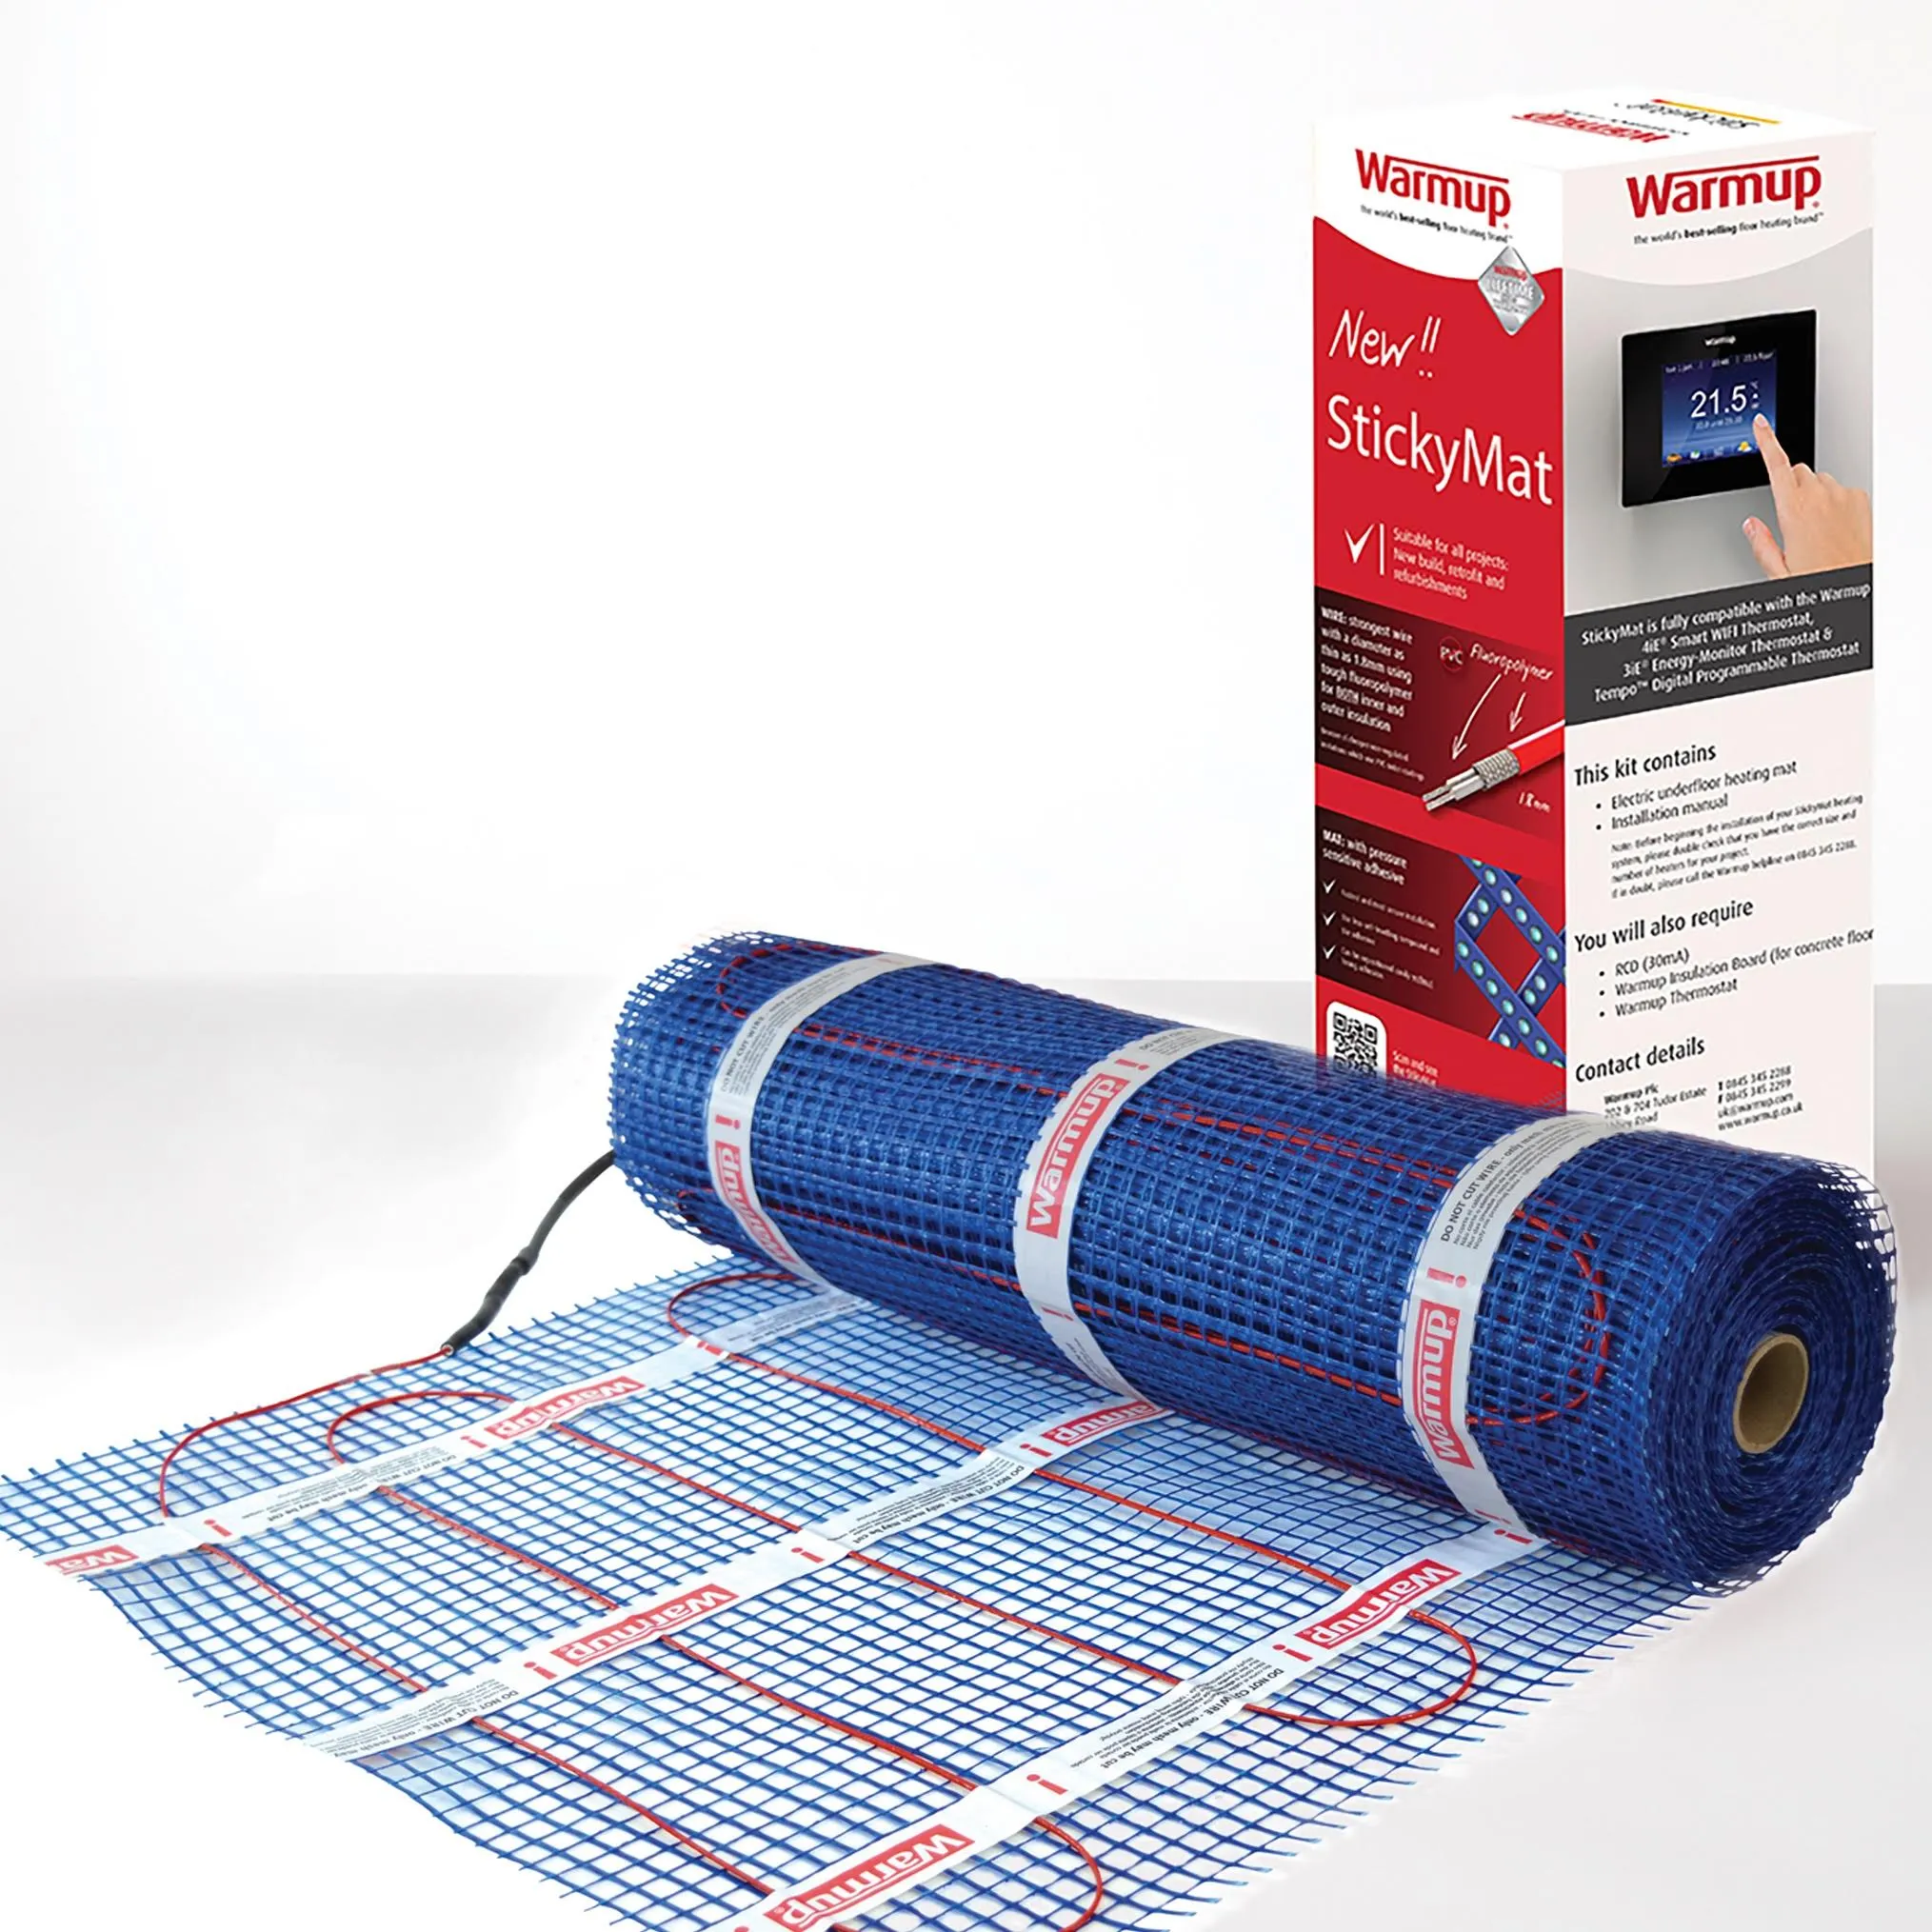 Warmup StickyMat Underfloor Heating System 200W/m² - 3m²